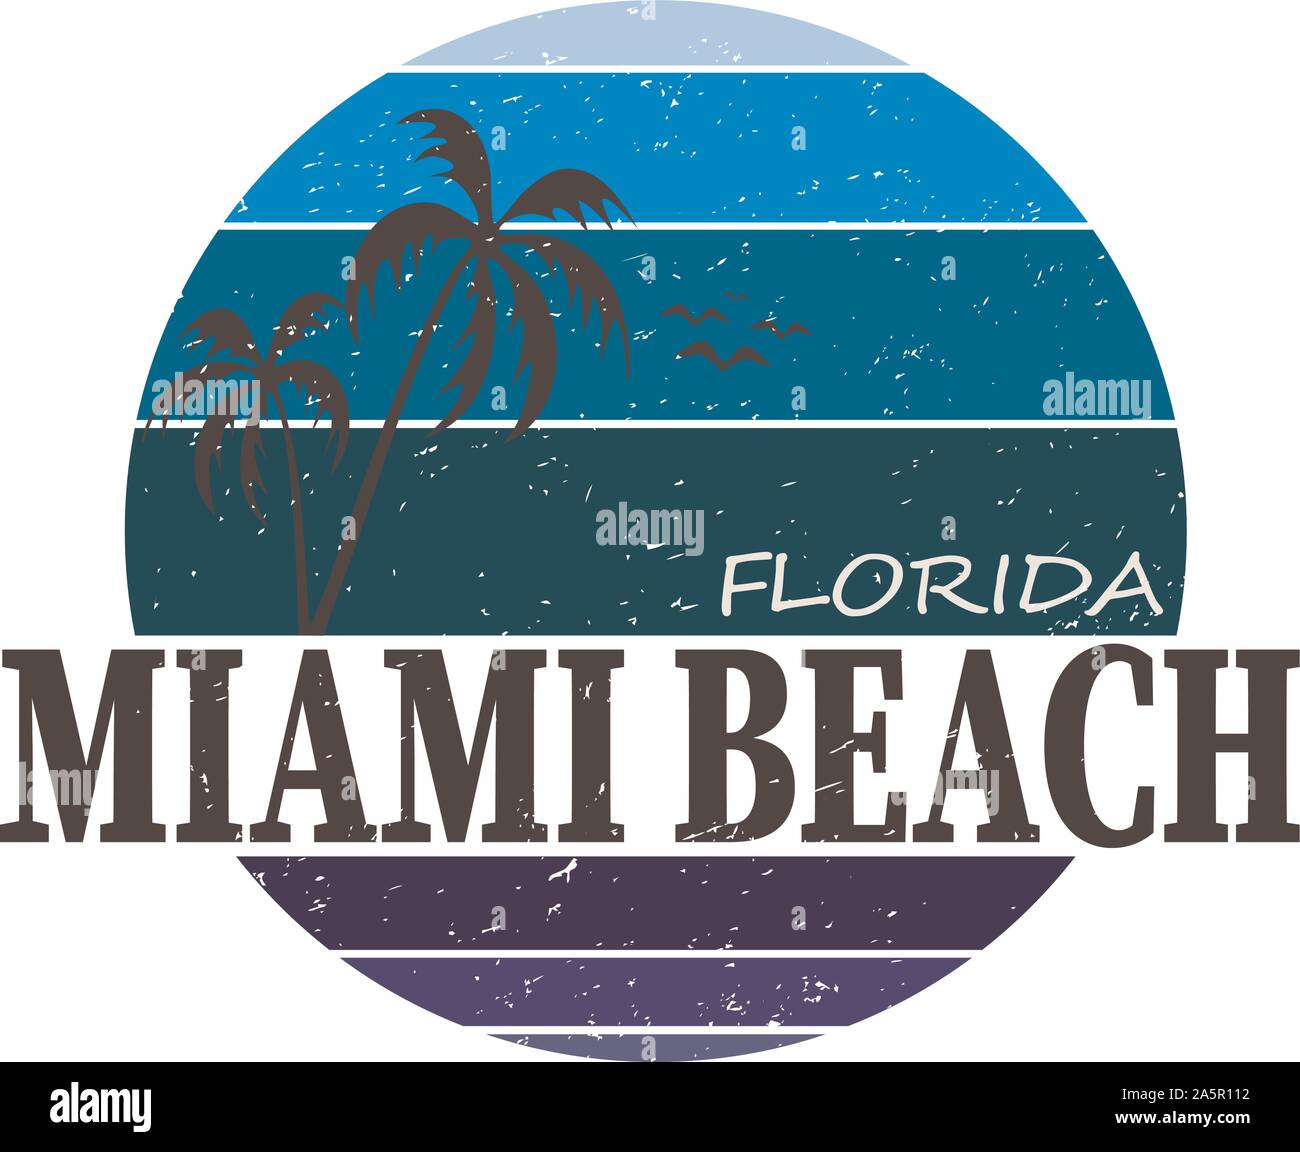 Florida t shirts Stock Vector Images - Alamy